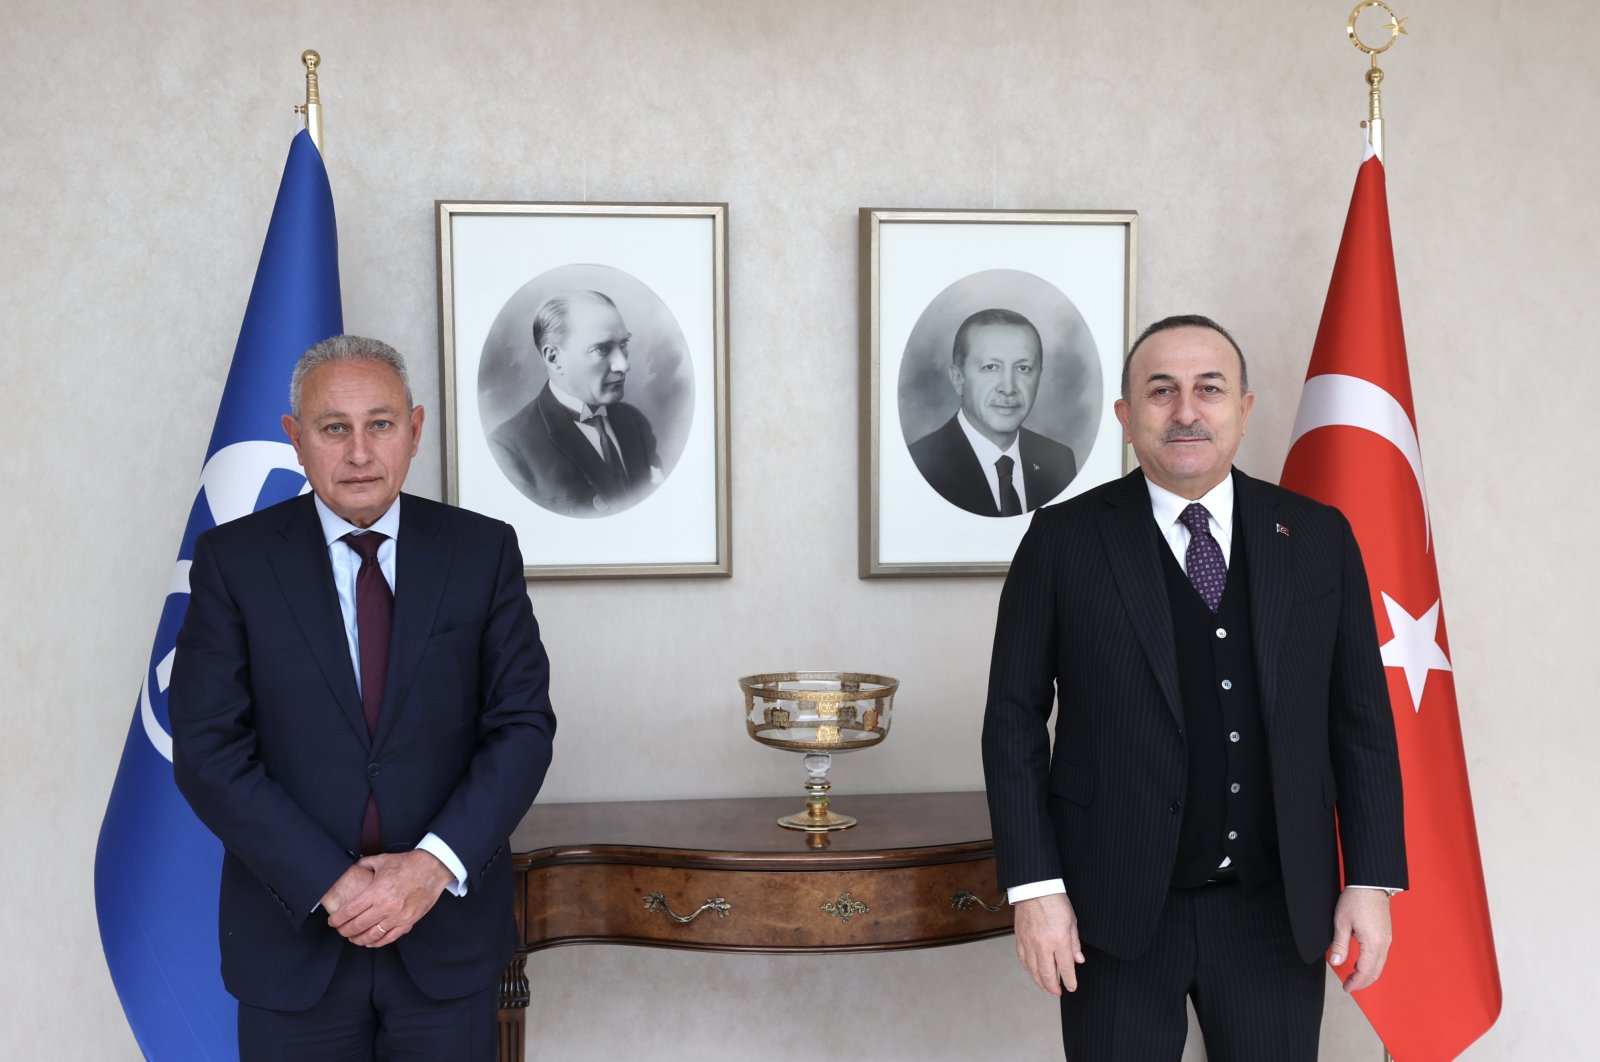 FM avuşoğlu, Nasser Kamel membahas stabilitas di Mediterania